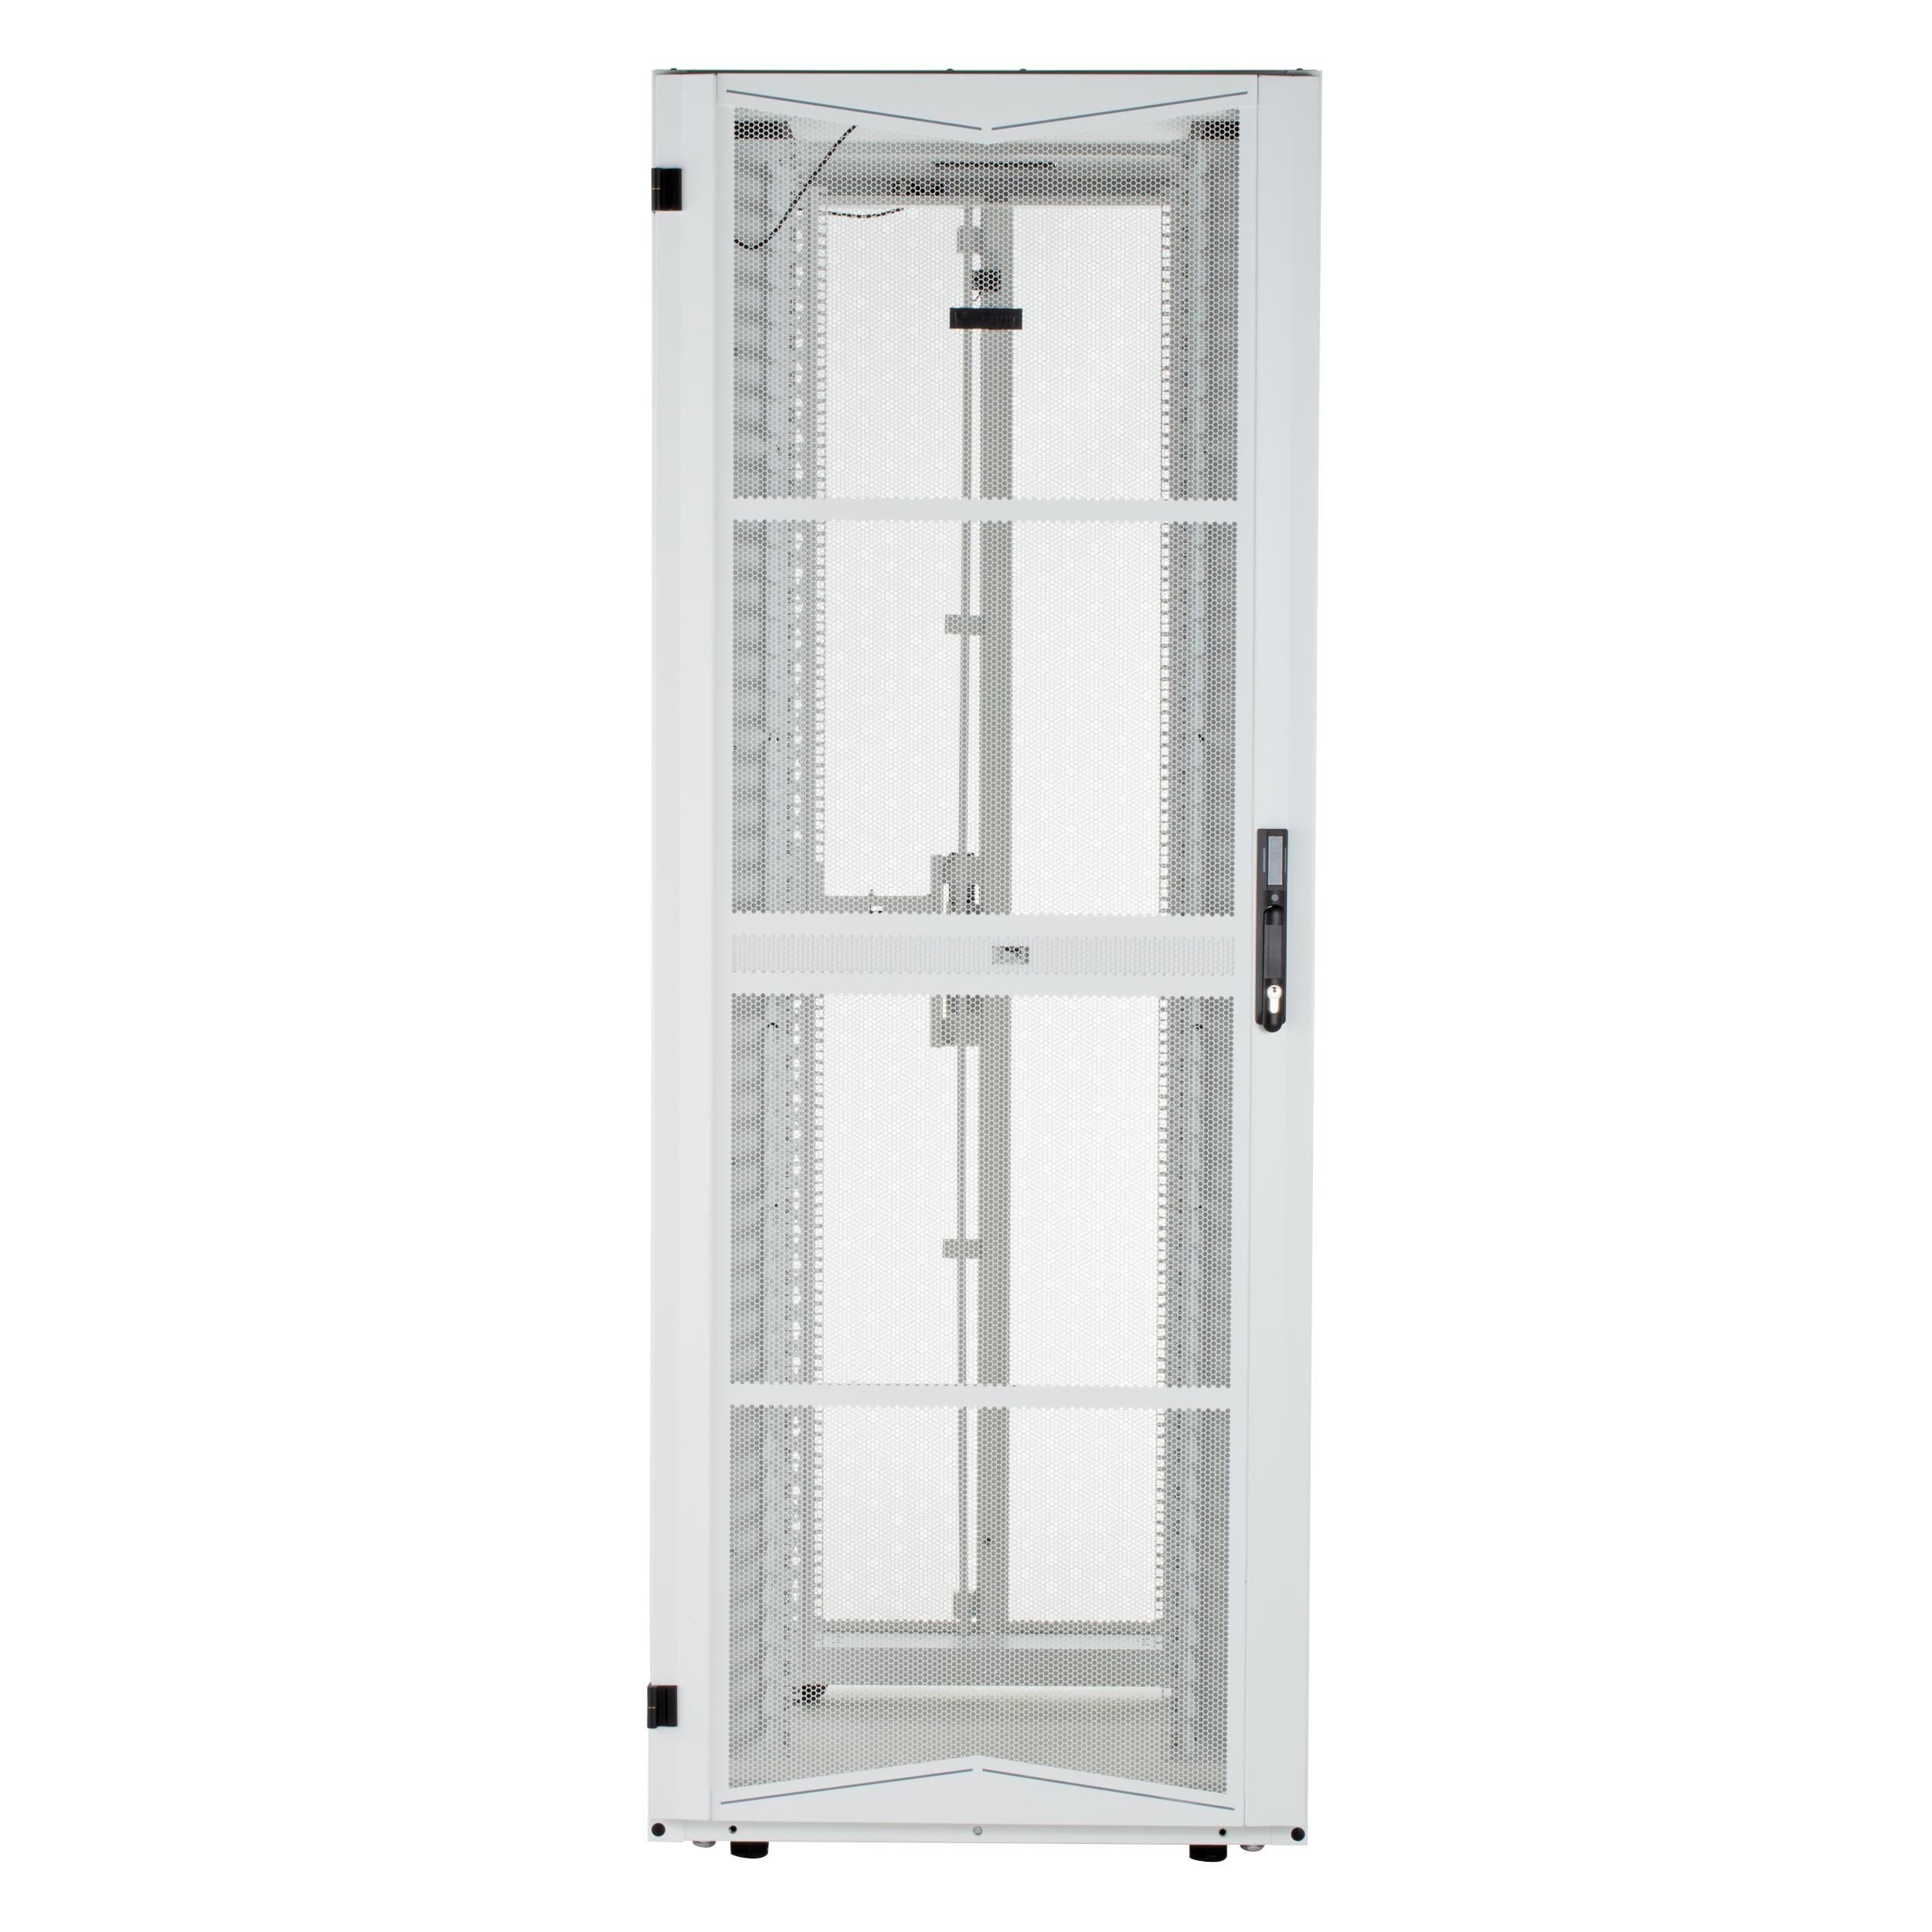 Panduit XG74222WS0001 FlexFusion Cabinet, 700mm x 42RU x 1070mm, White